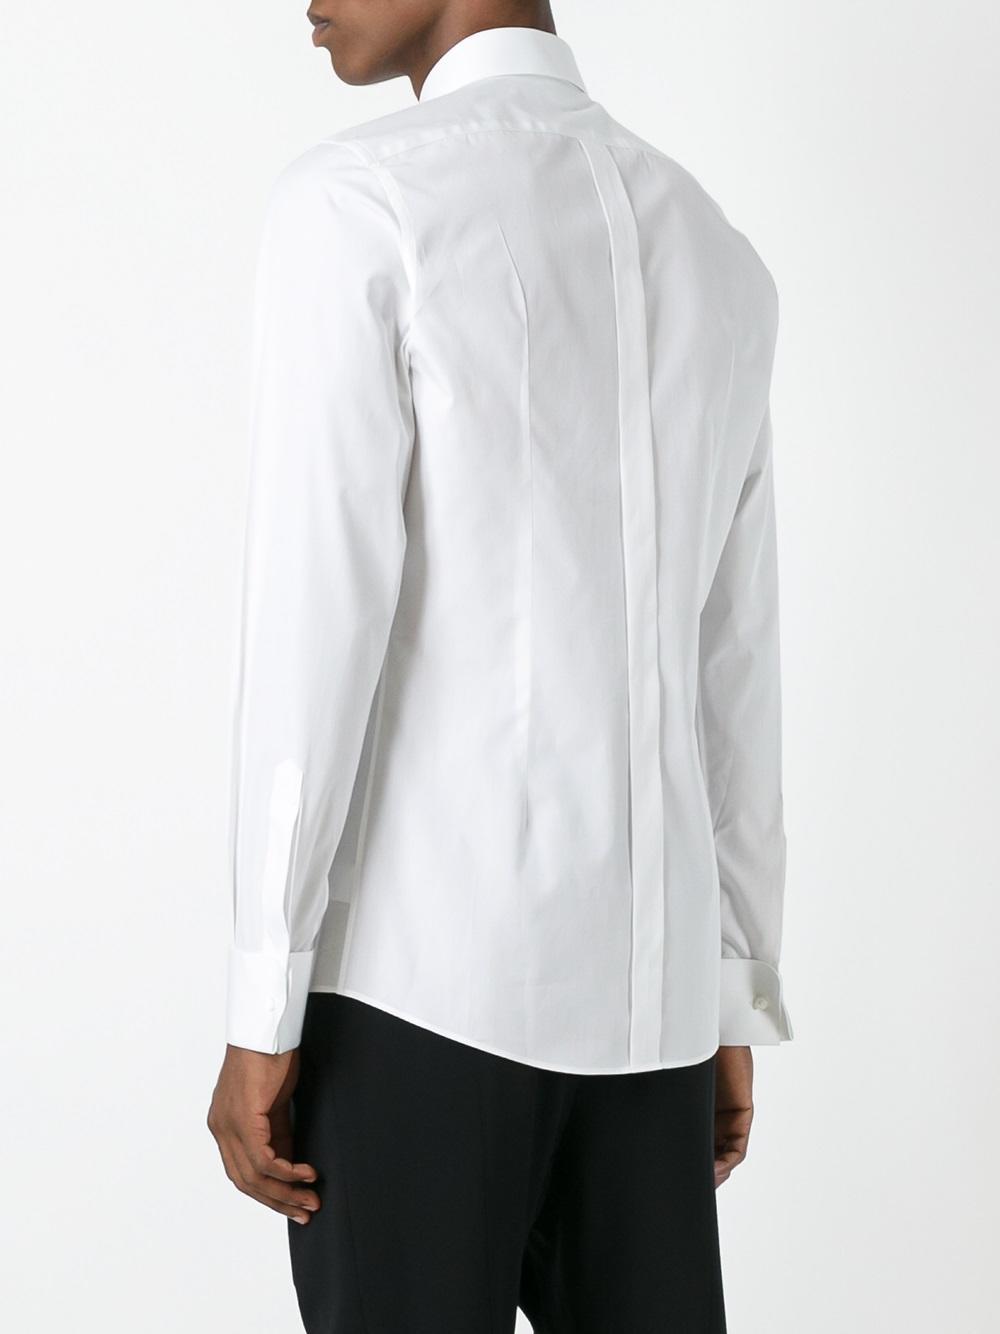 Dolce & Gabbana Cotton Bib Shirt in White for Men - Lyst